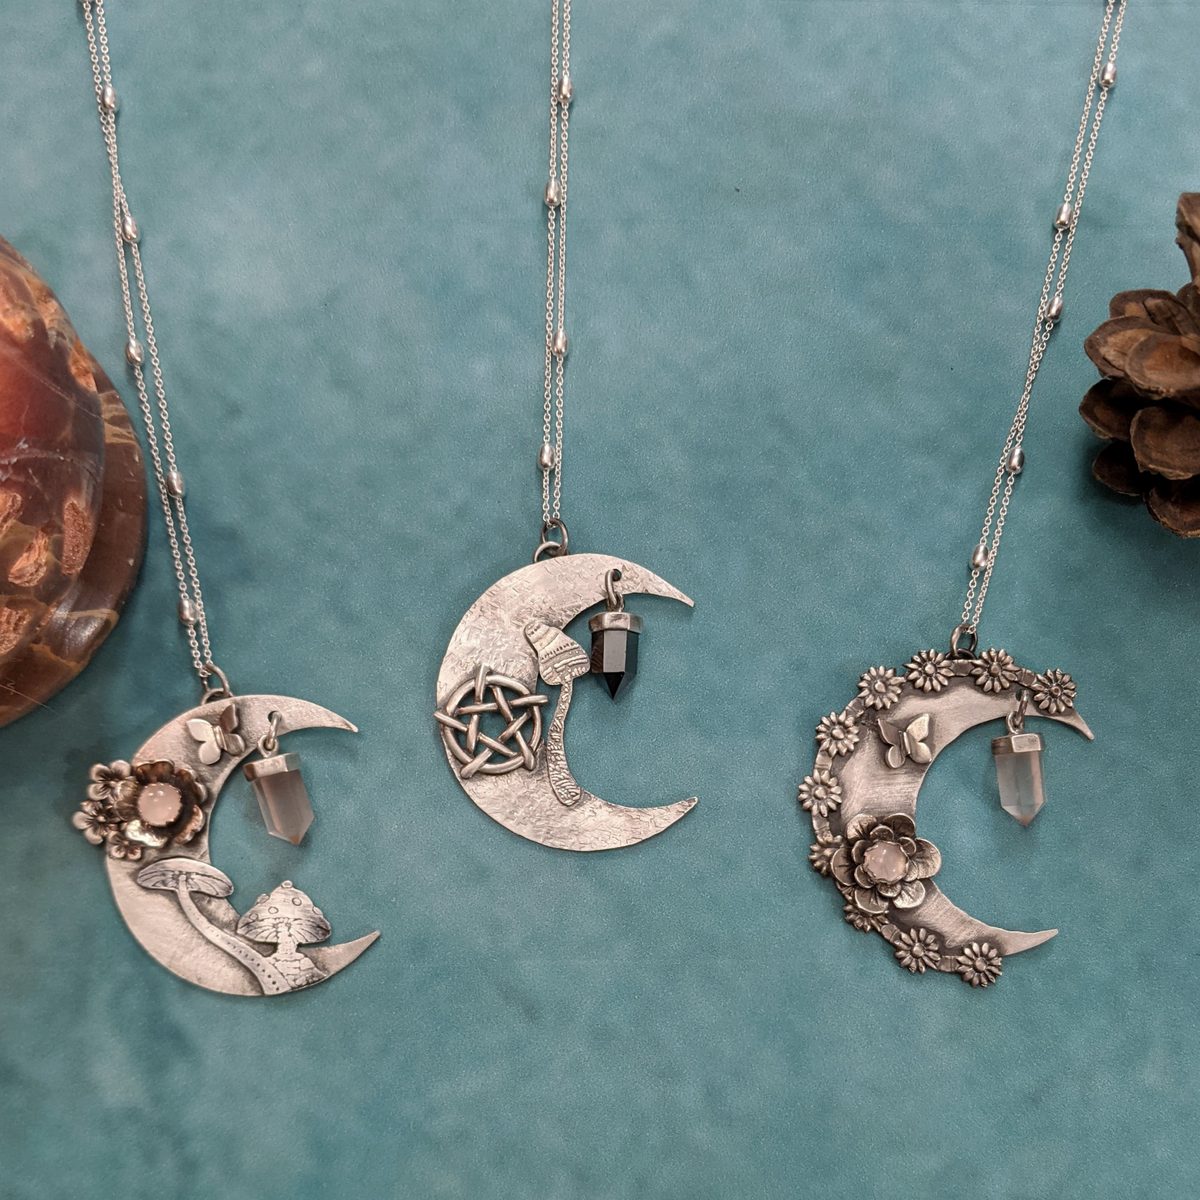 Crescent Moon Necklace with Rose Quartz and Mushrooms